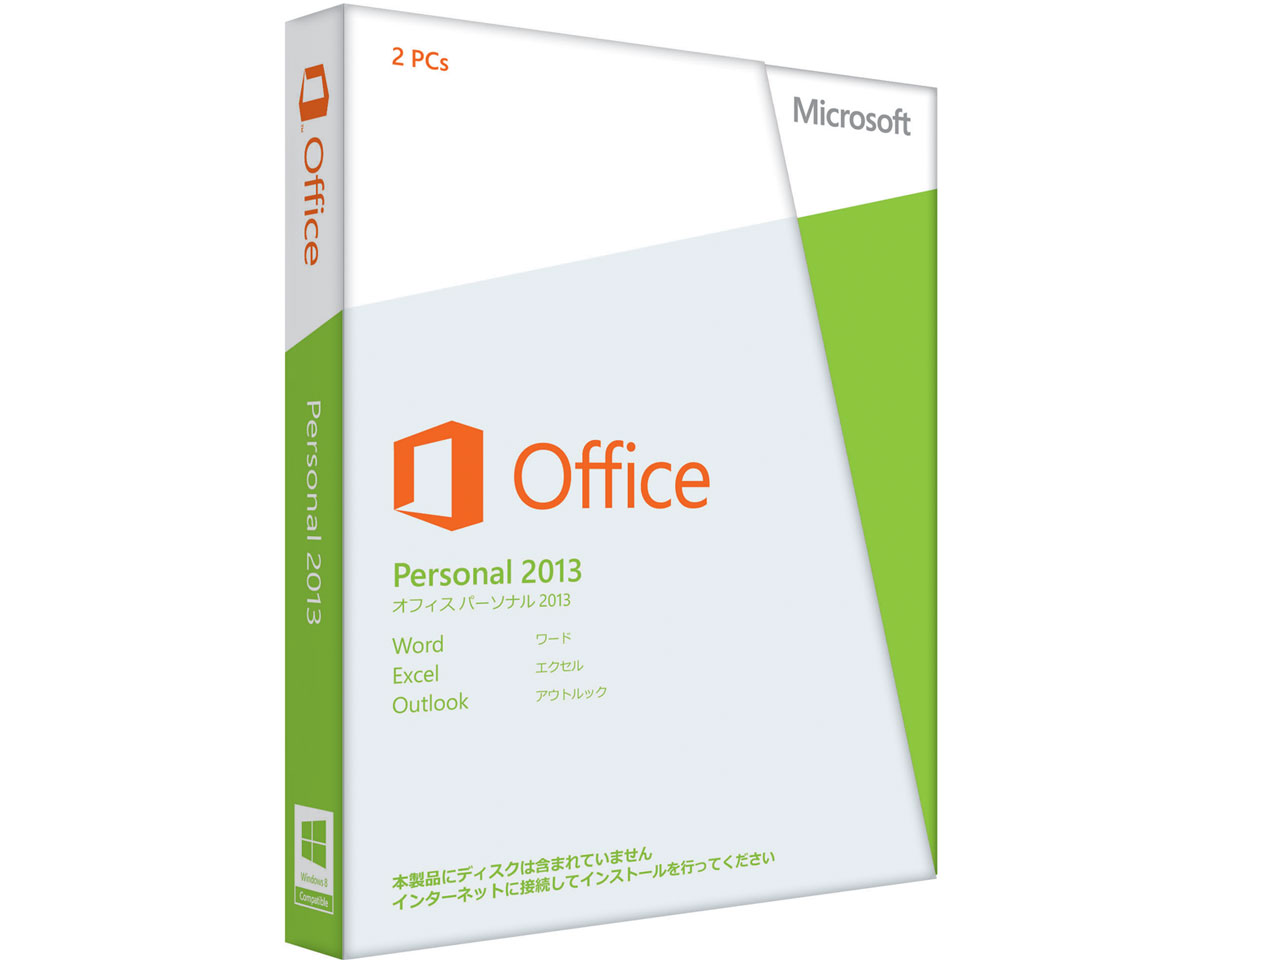 Office Personal 2013 の製品画像